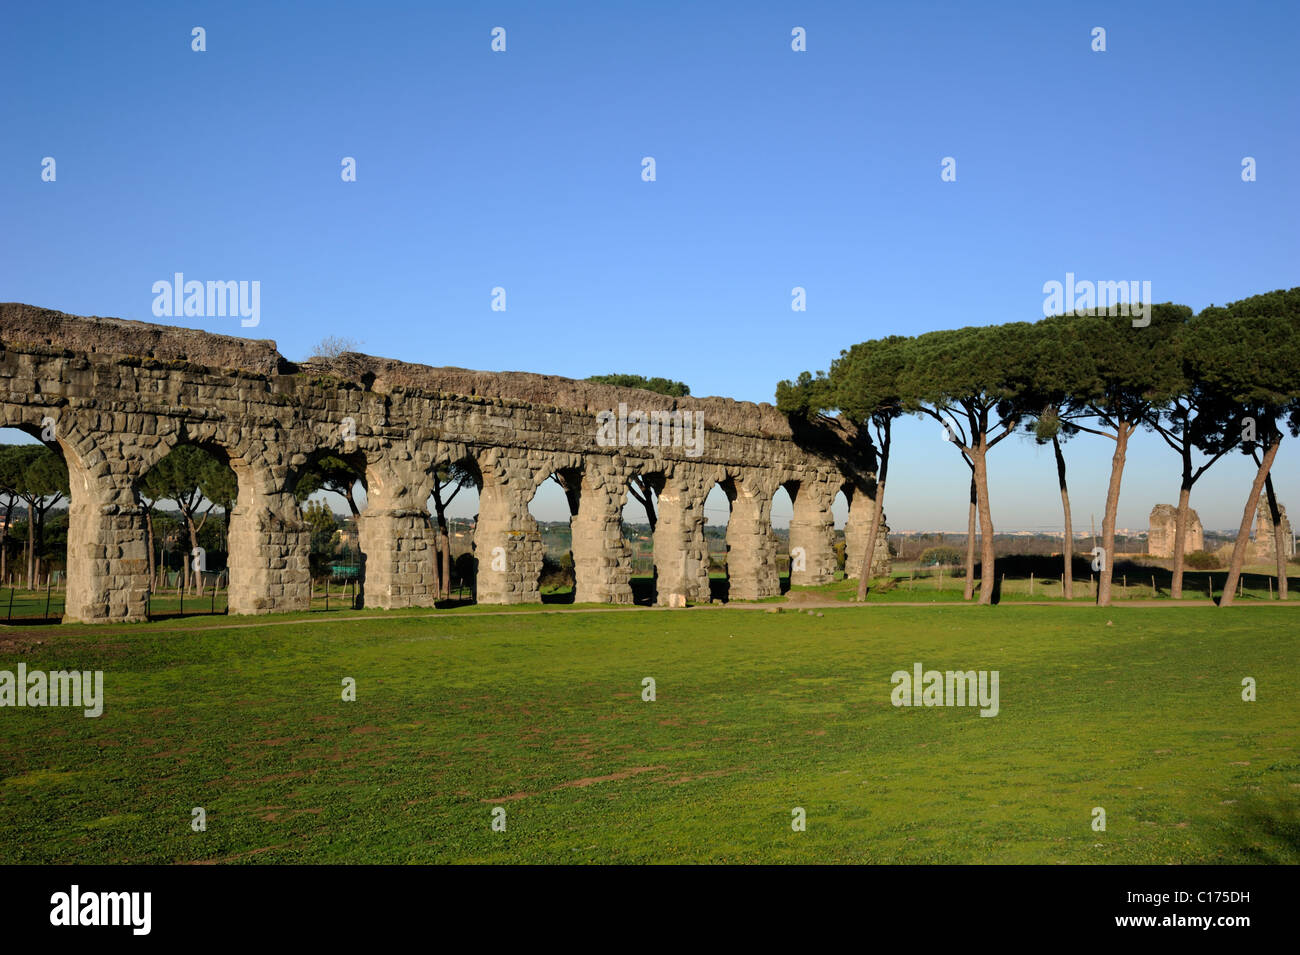 Italy, Rome, ancient roman aqueduct of the Aqua Claudia in the Parco degli Acquedotti (Aqueducts Park) Stock Photo